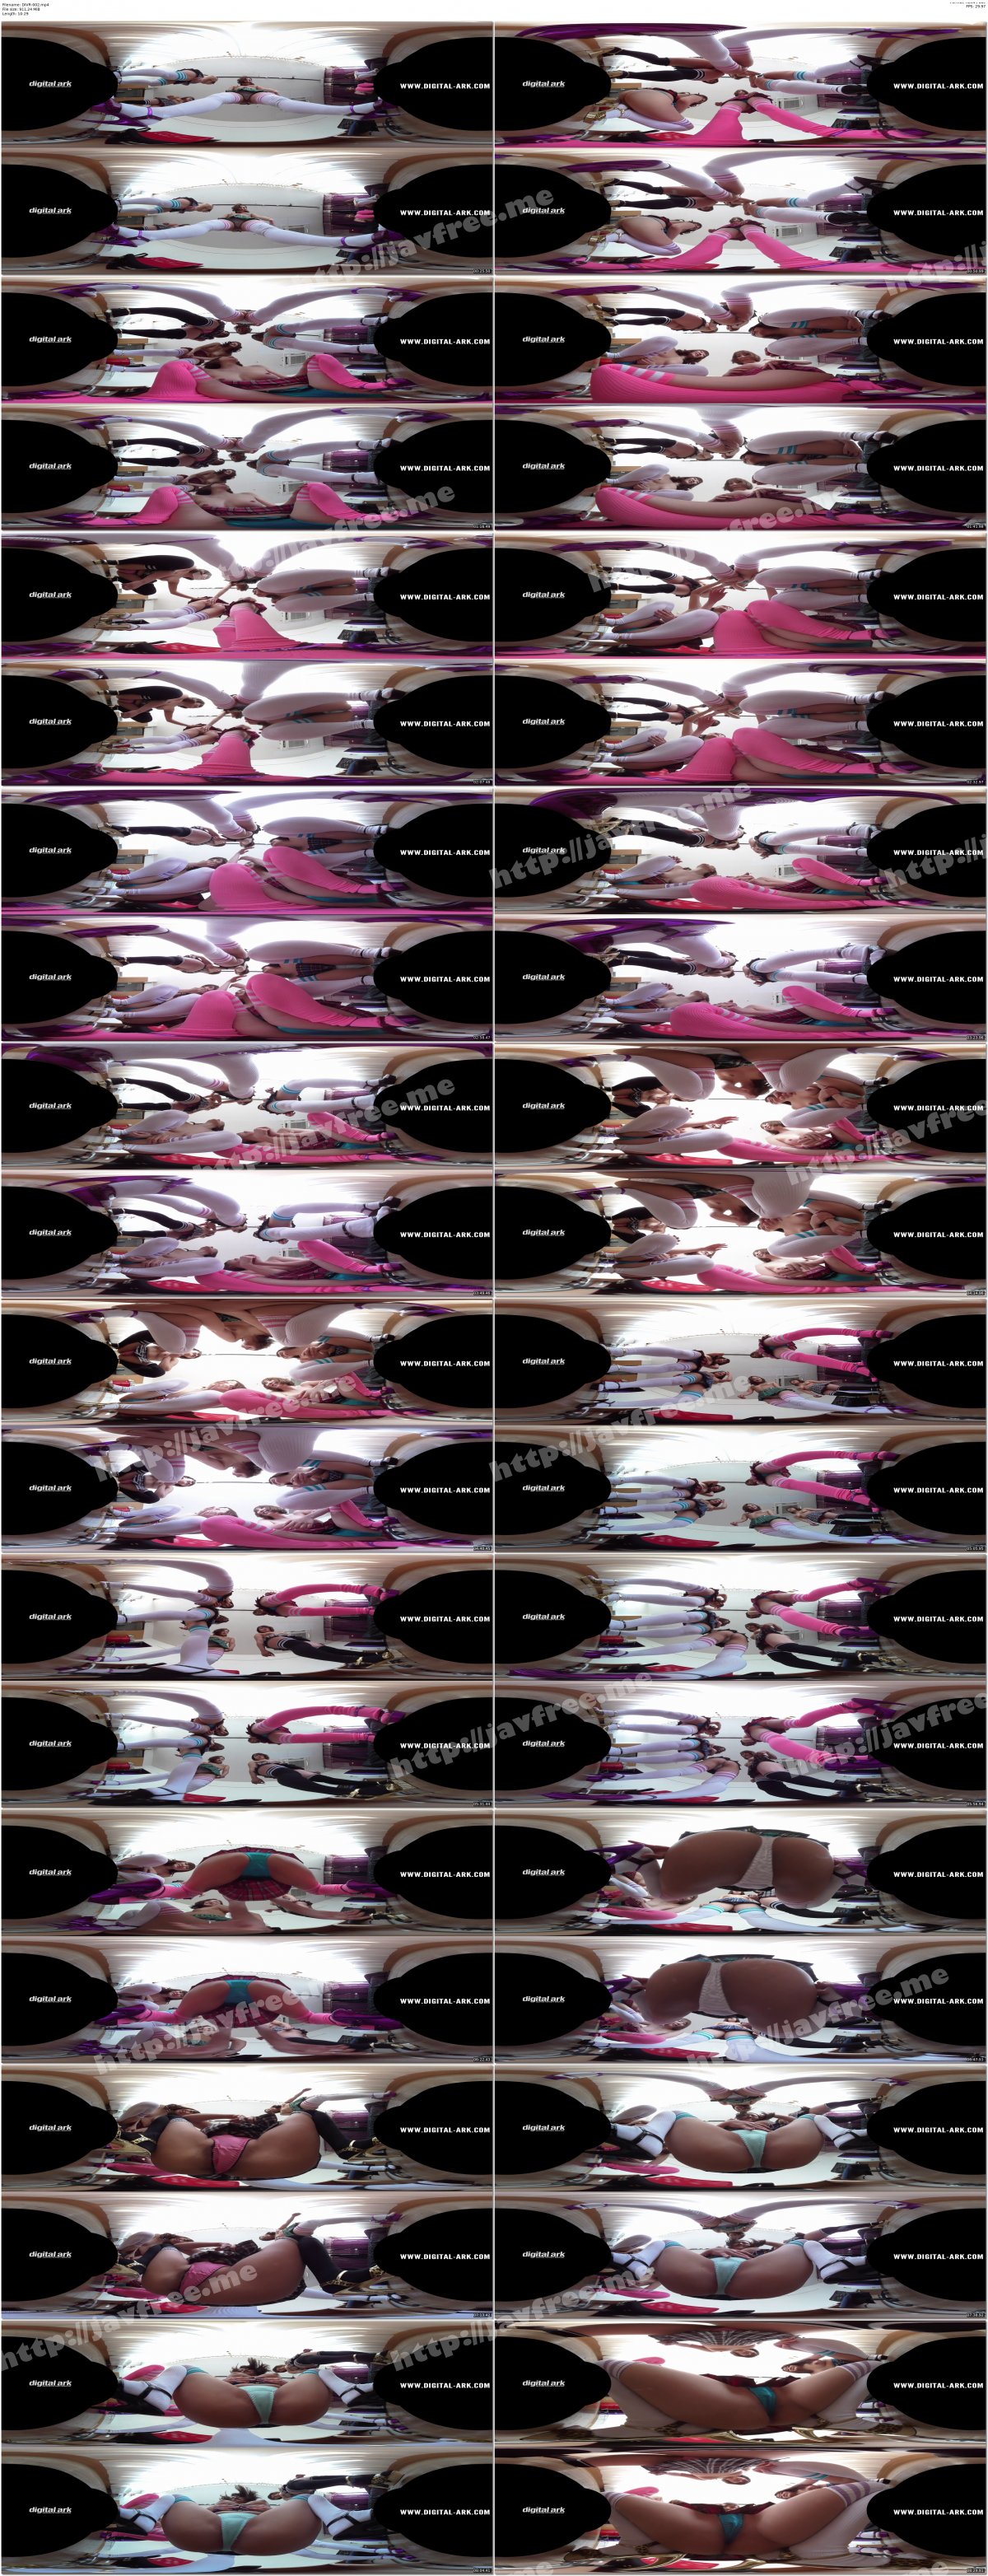 [DIVR-002] 【VR】トップレスで超ミニスカのお姉さん達が、食い込みパンティーを見せつけてくるんです3DVR - image DIVR-002 on https://javfree.me